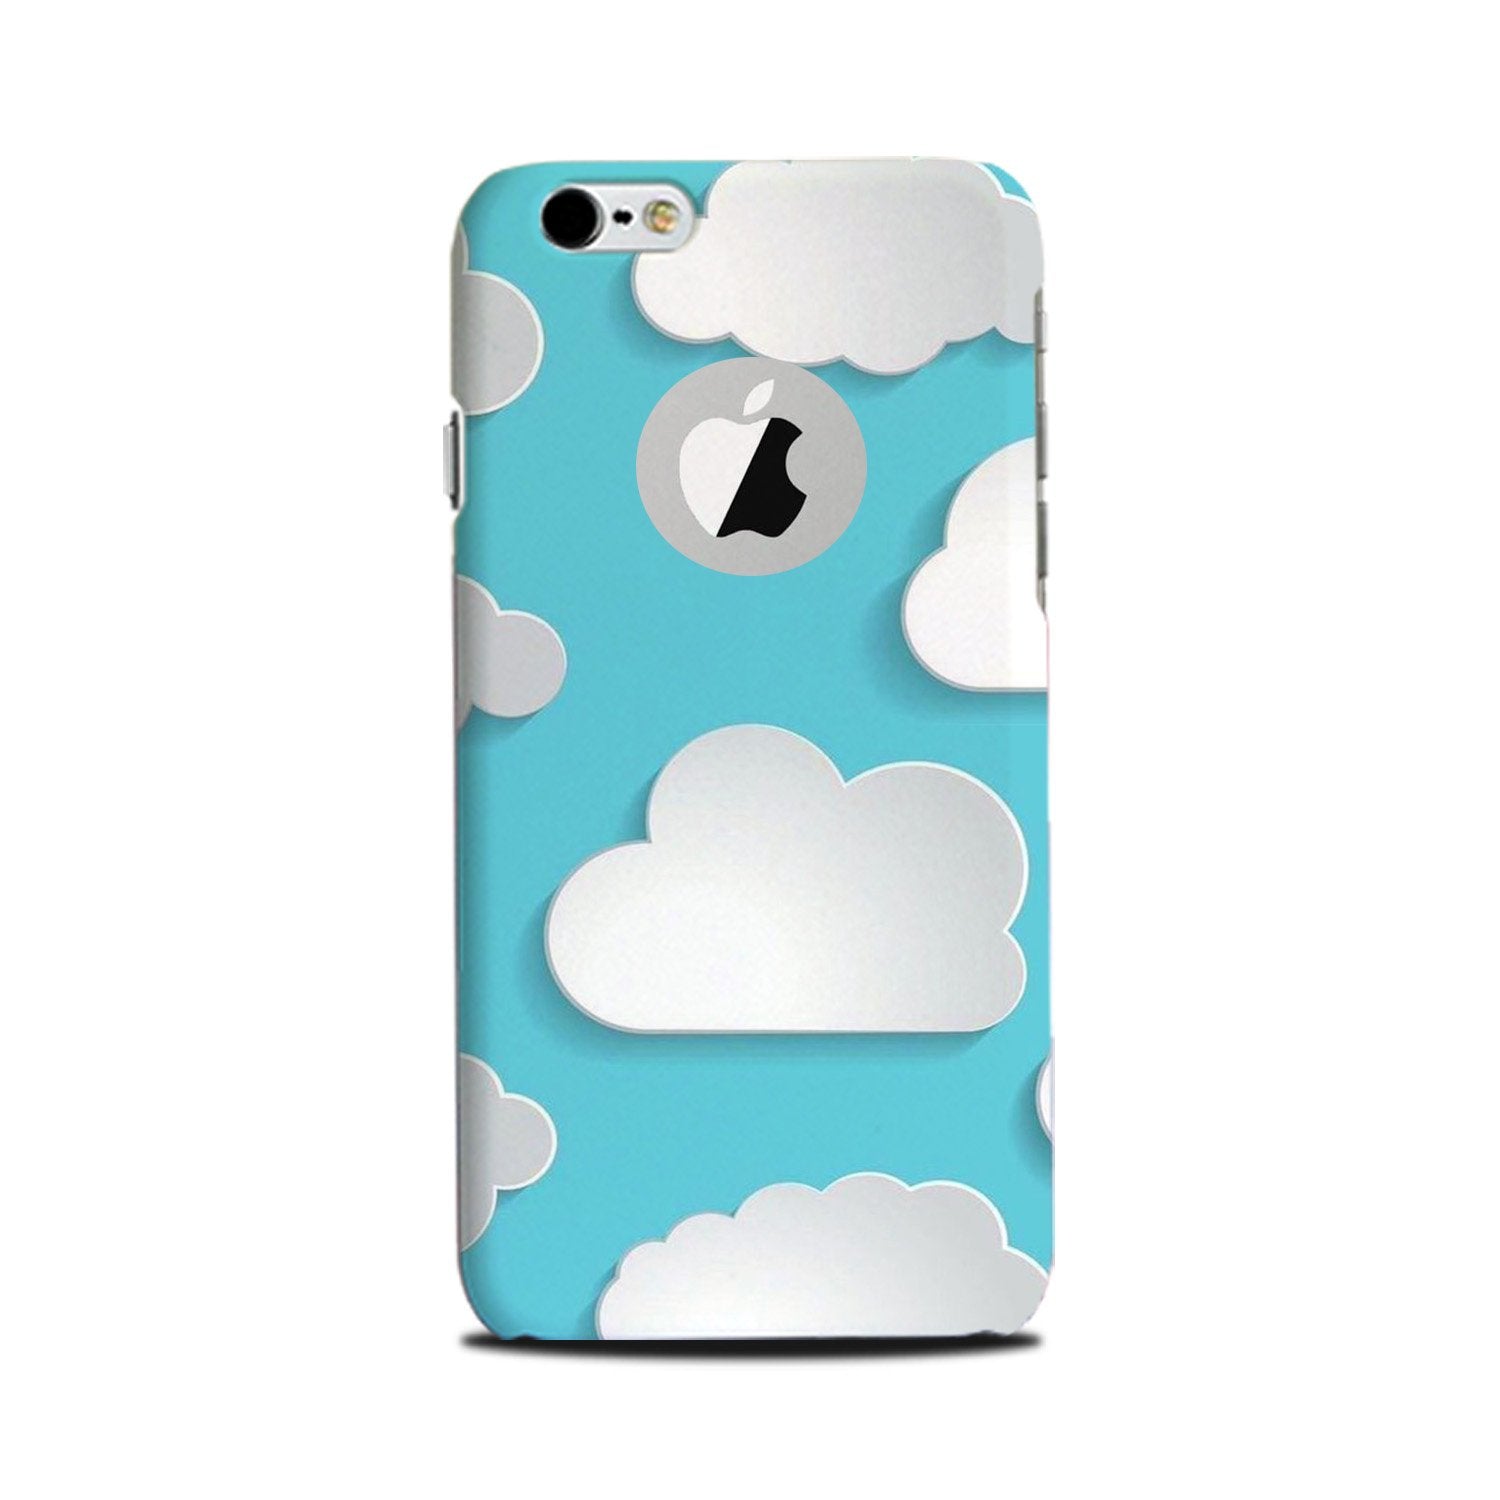 Clouds Case for iPhone 6 Plus / 6s Plus logo cut(Design No. 210)